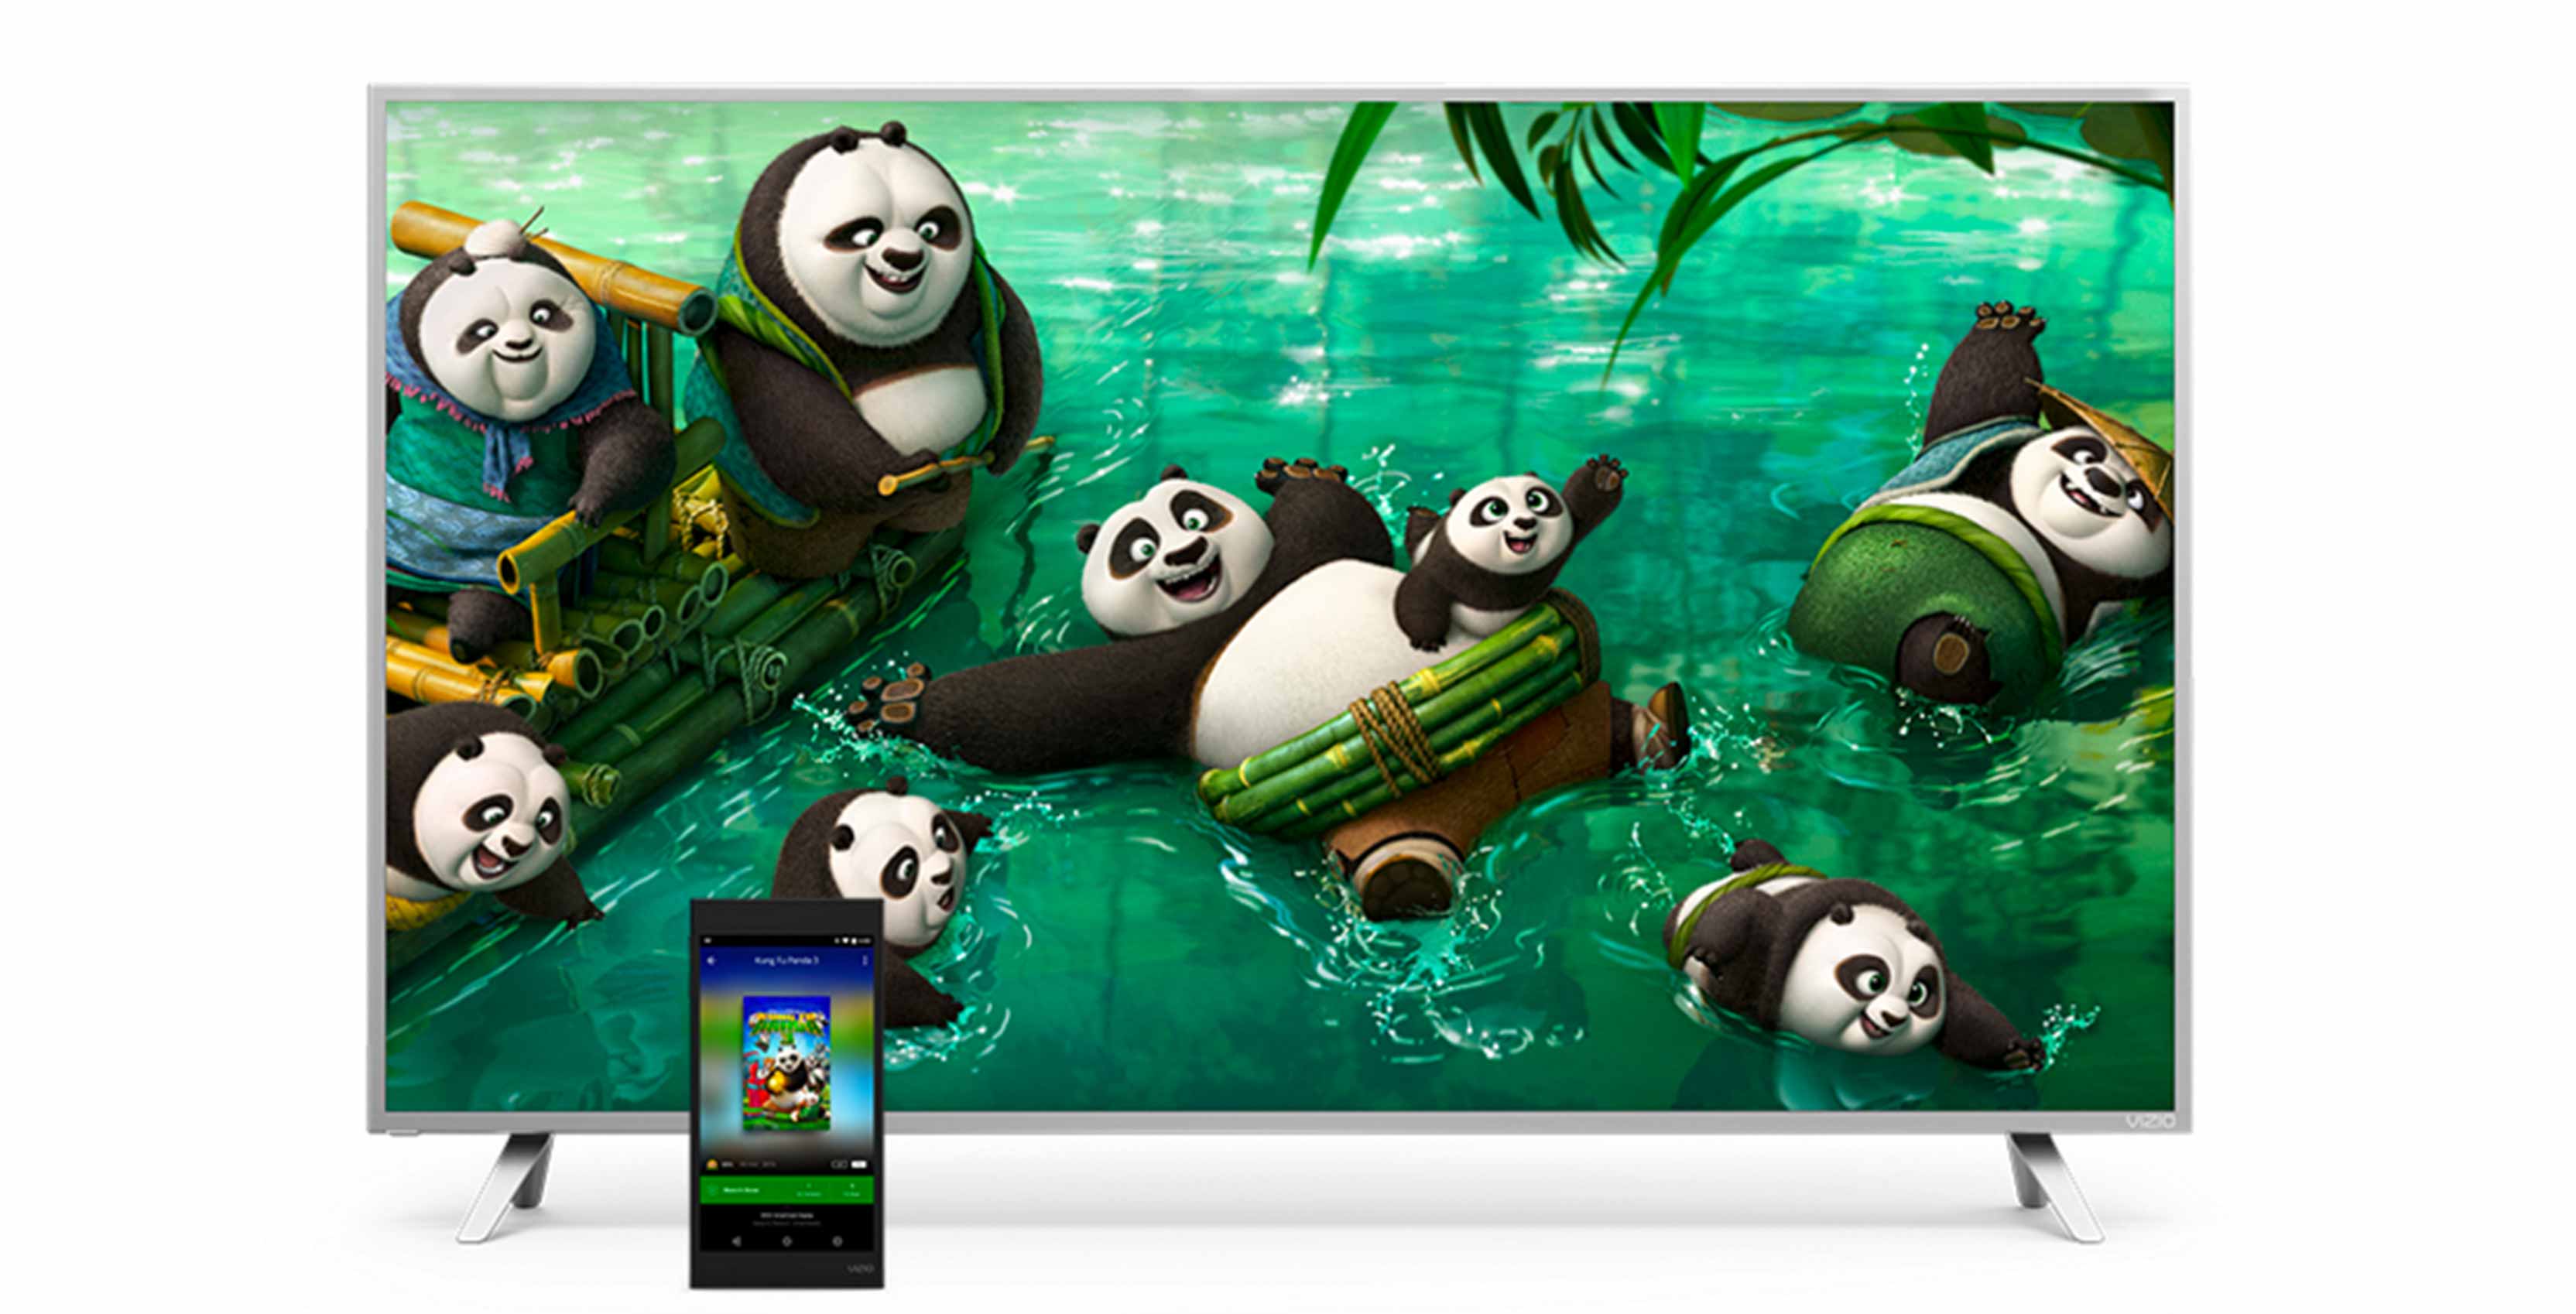 Vizio P-Series television with Kung-Fu Panda on it